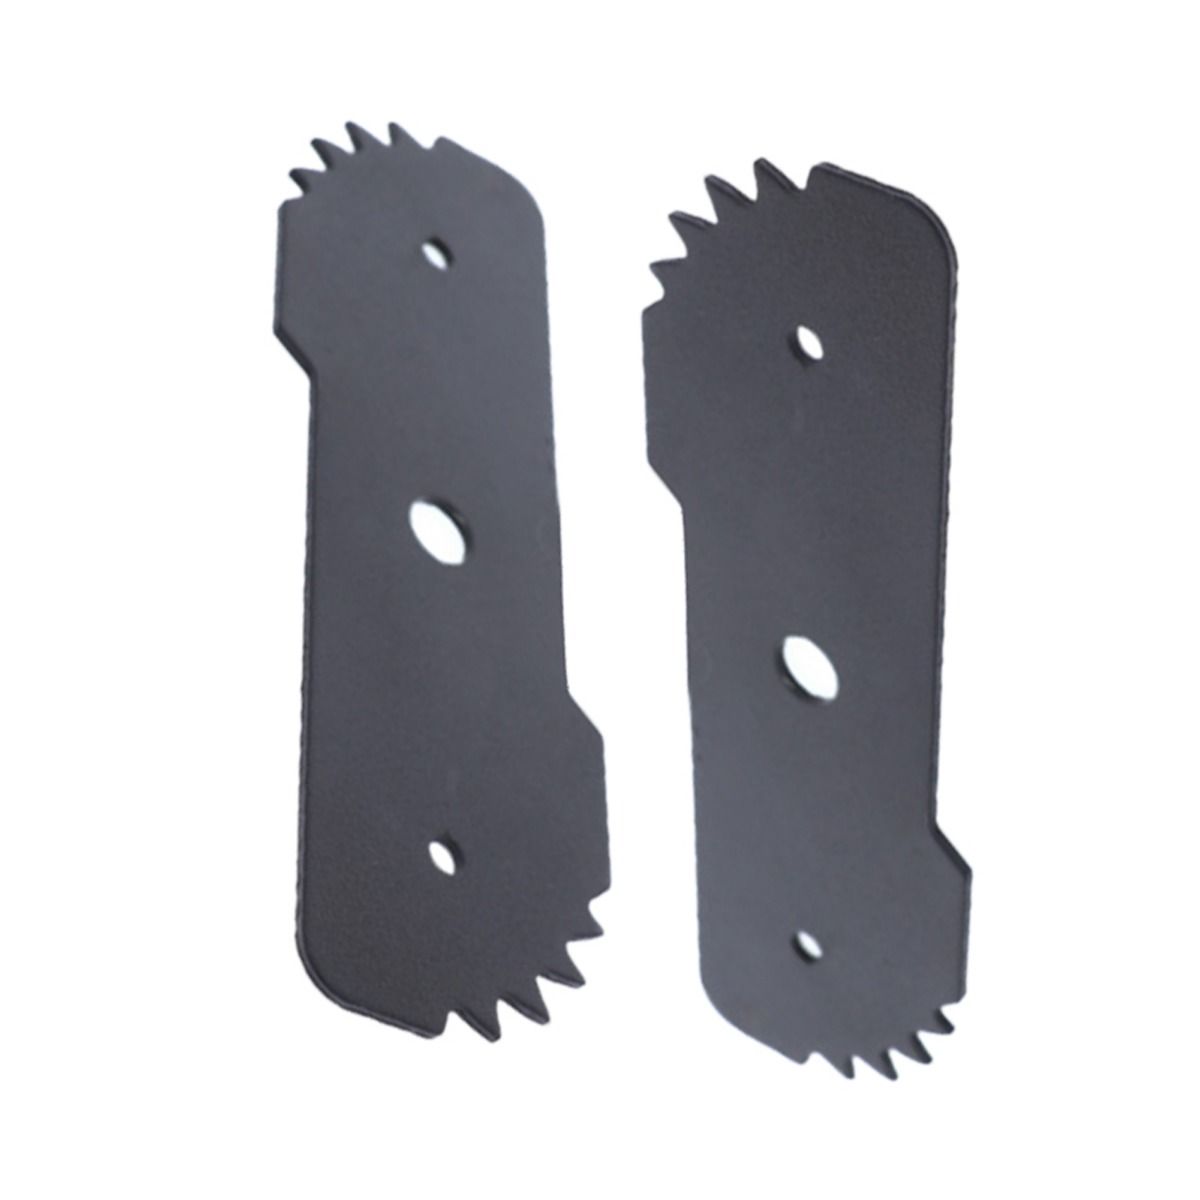 2Pcs Edger Blade 243801-02 Black and Decker Craftsman